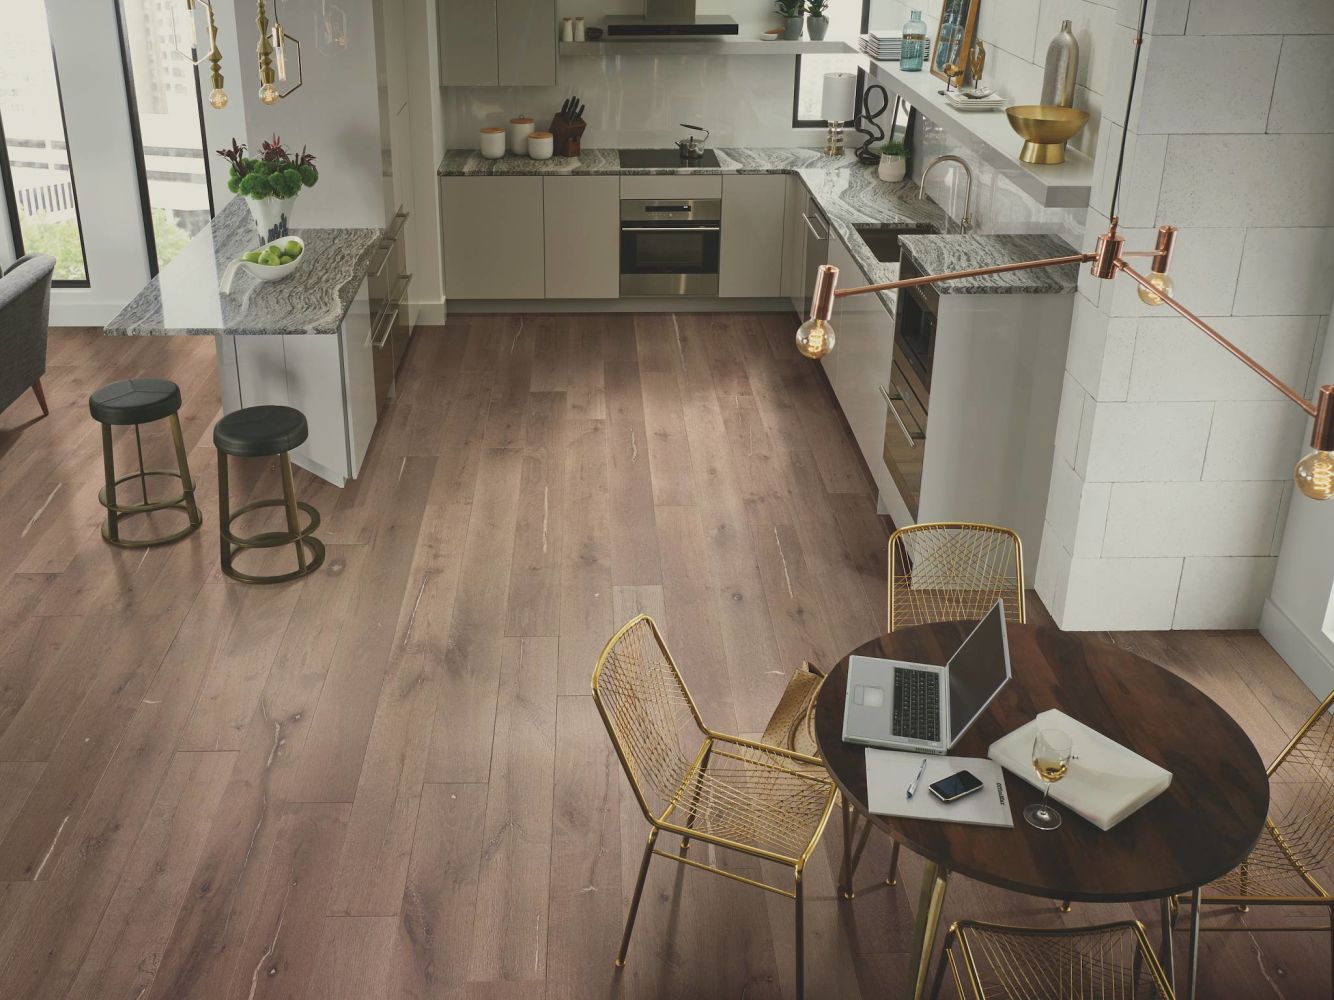 Shaw Floors Repel Hardwood Inspirations White Oak Tinderbox 05082_213SA